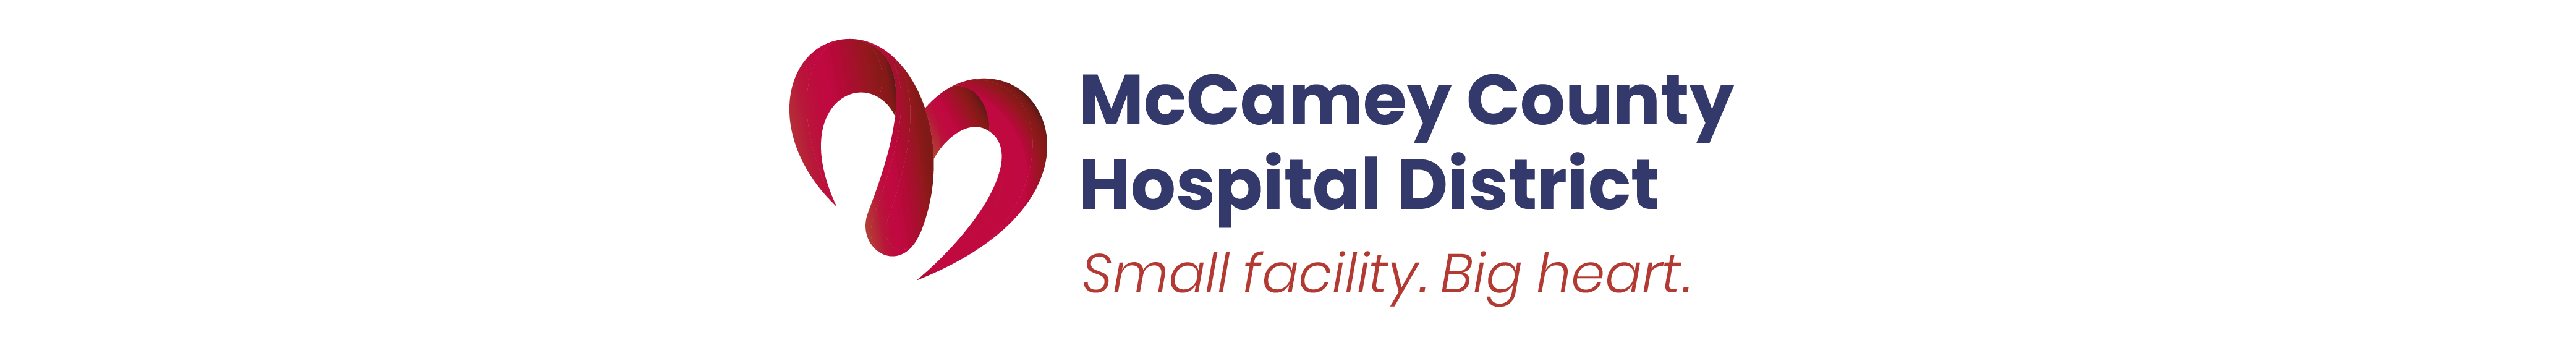 McCamey County Hospital District
Small Facility. Big Heart.